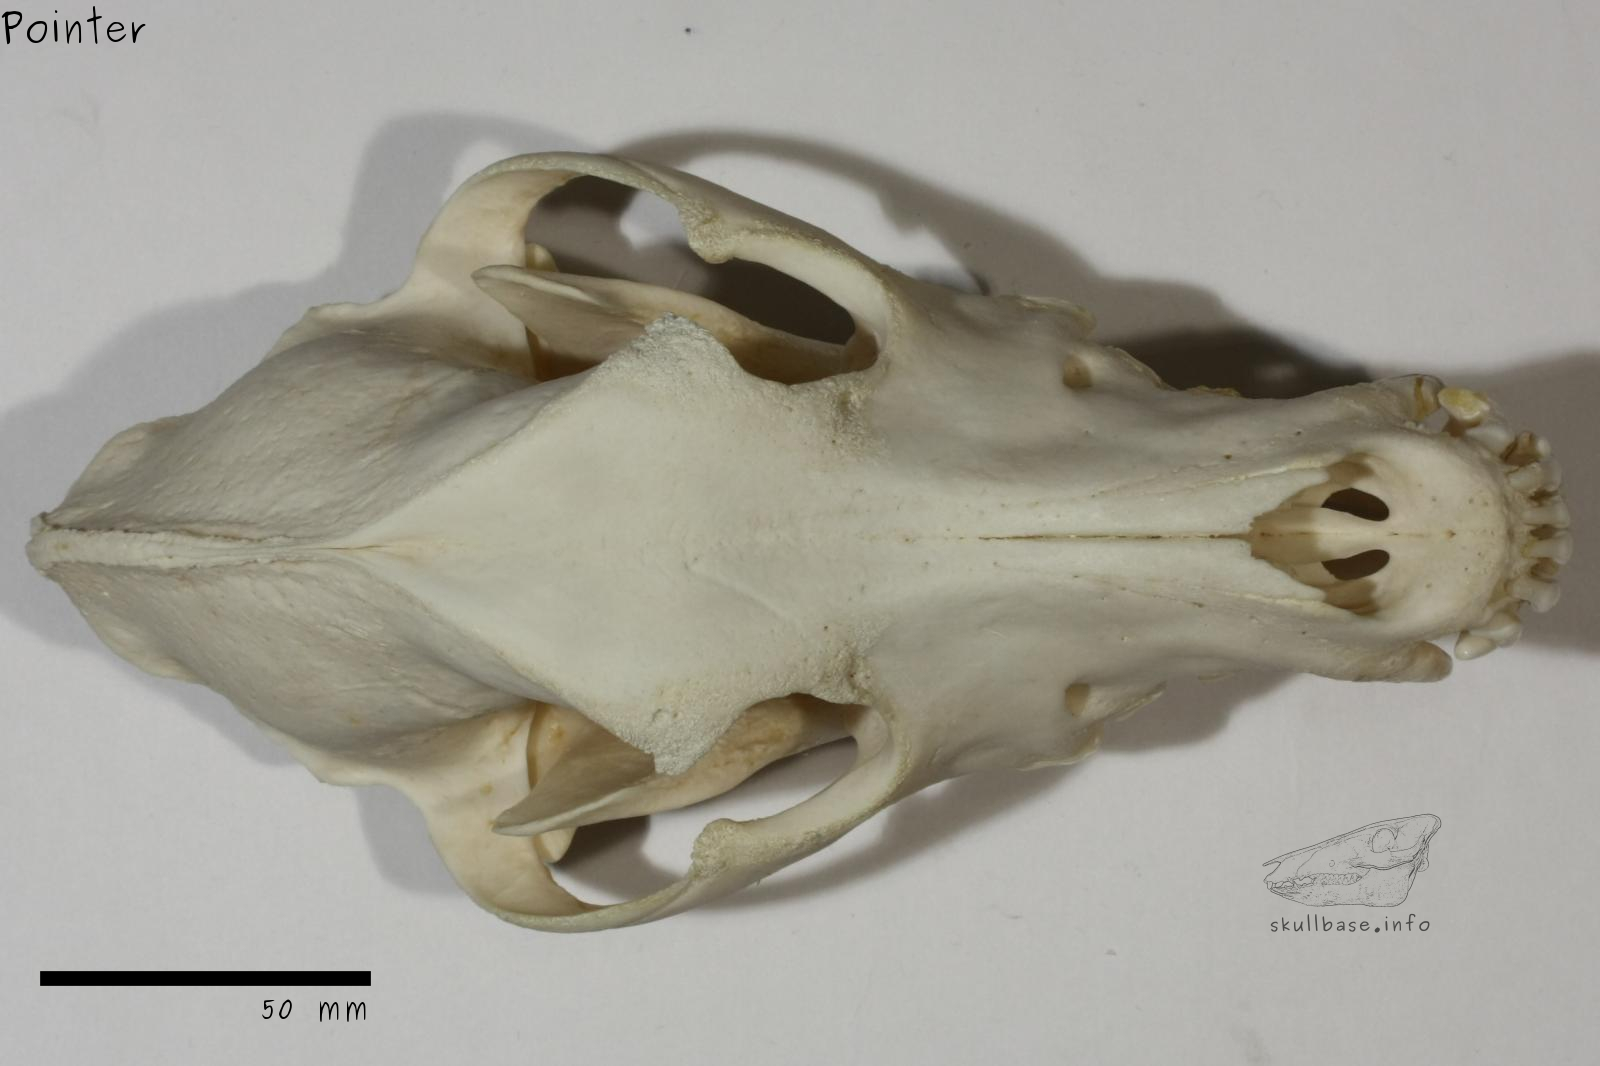 Pointer (Canis lupus familiaris) skull dorsal view